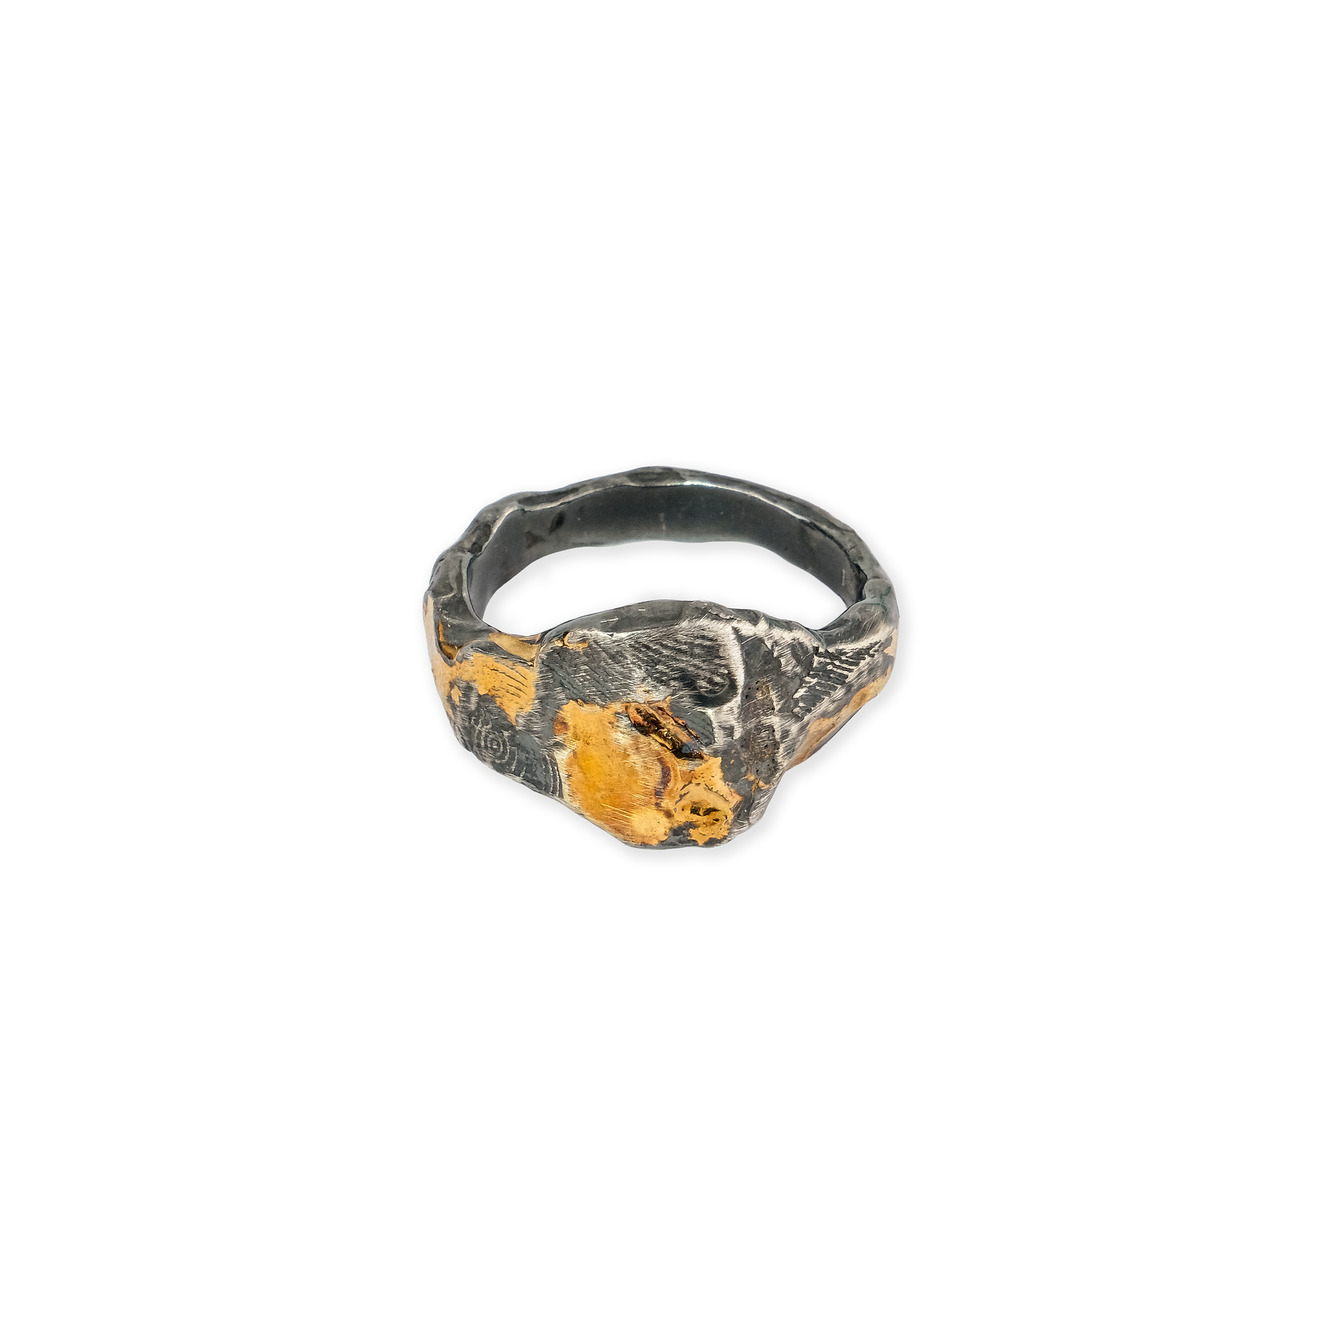 Kintsugi Jewelry Кольцо Hope из серебра с позолотой liya кольцо с позолотой и вставками из эмали